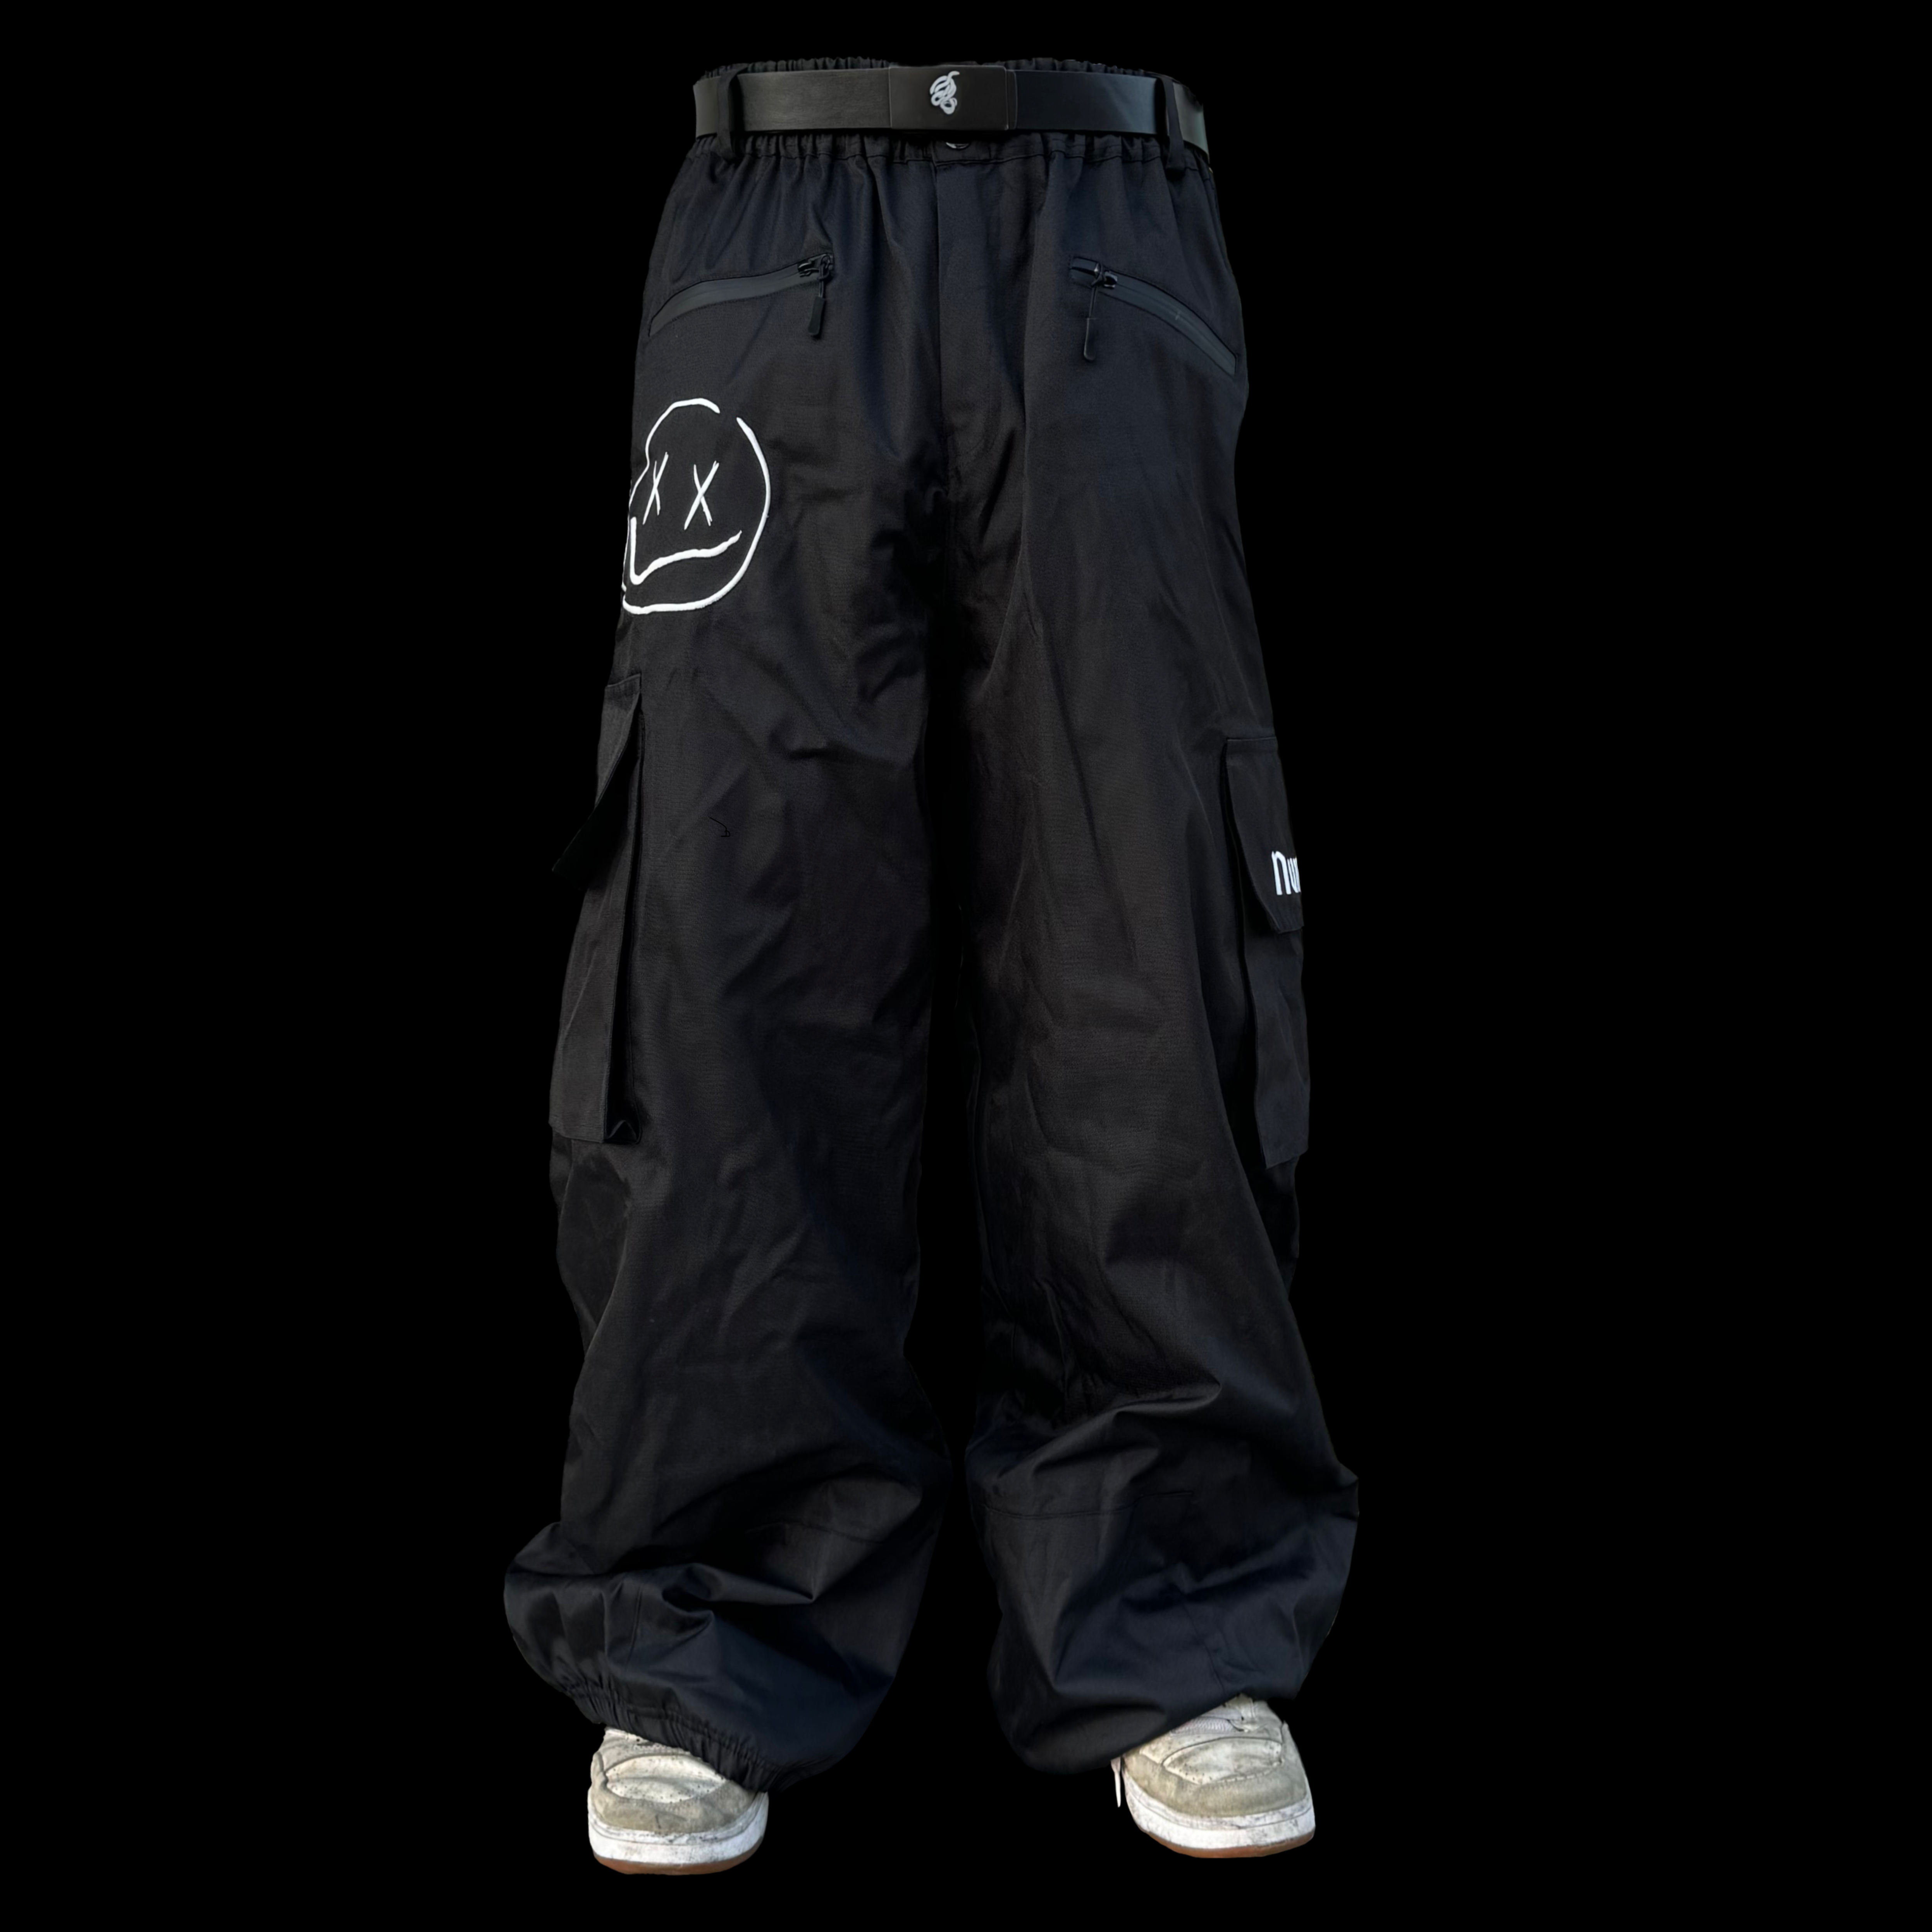 Buy Cartel Kiroro Unisex Plus Size Ski Pants Black 3XL-9XL Online